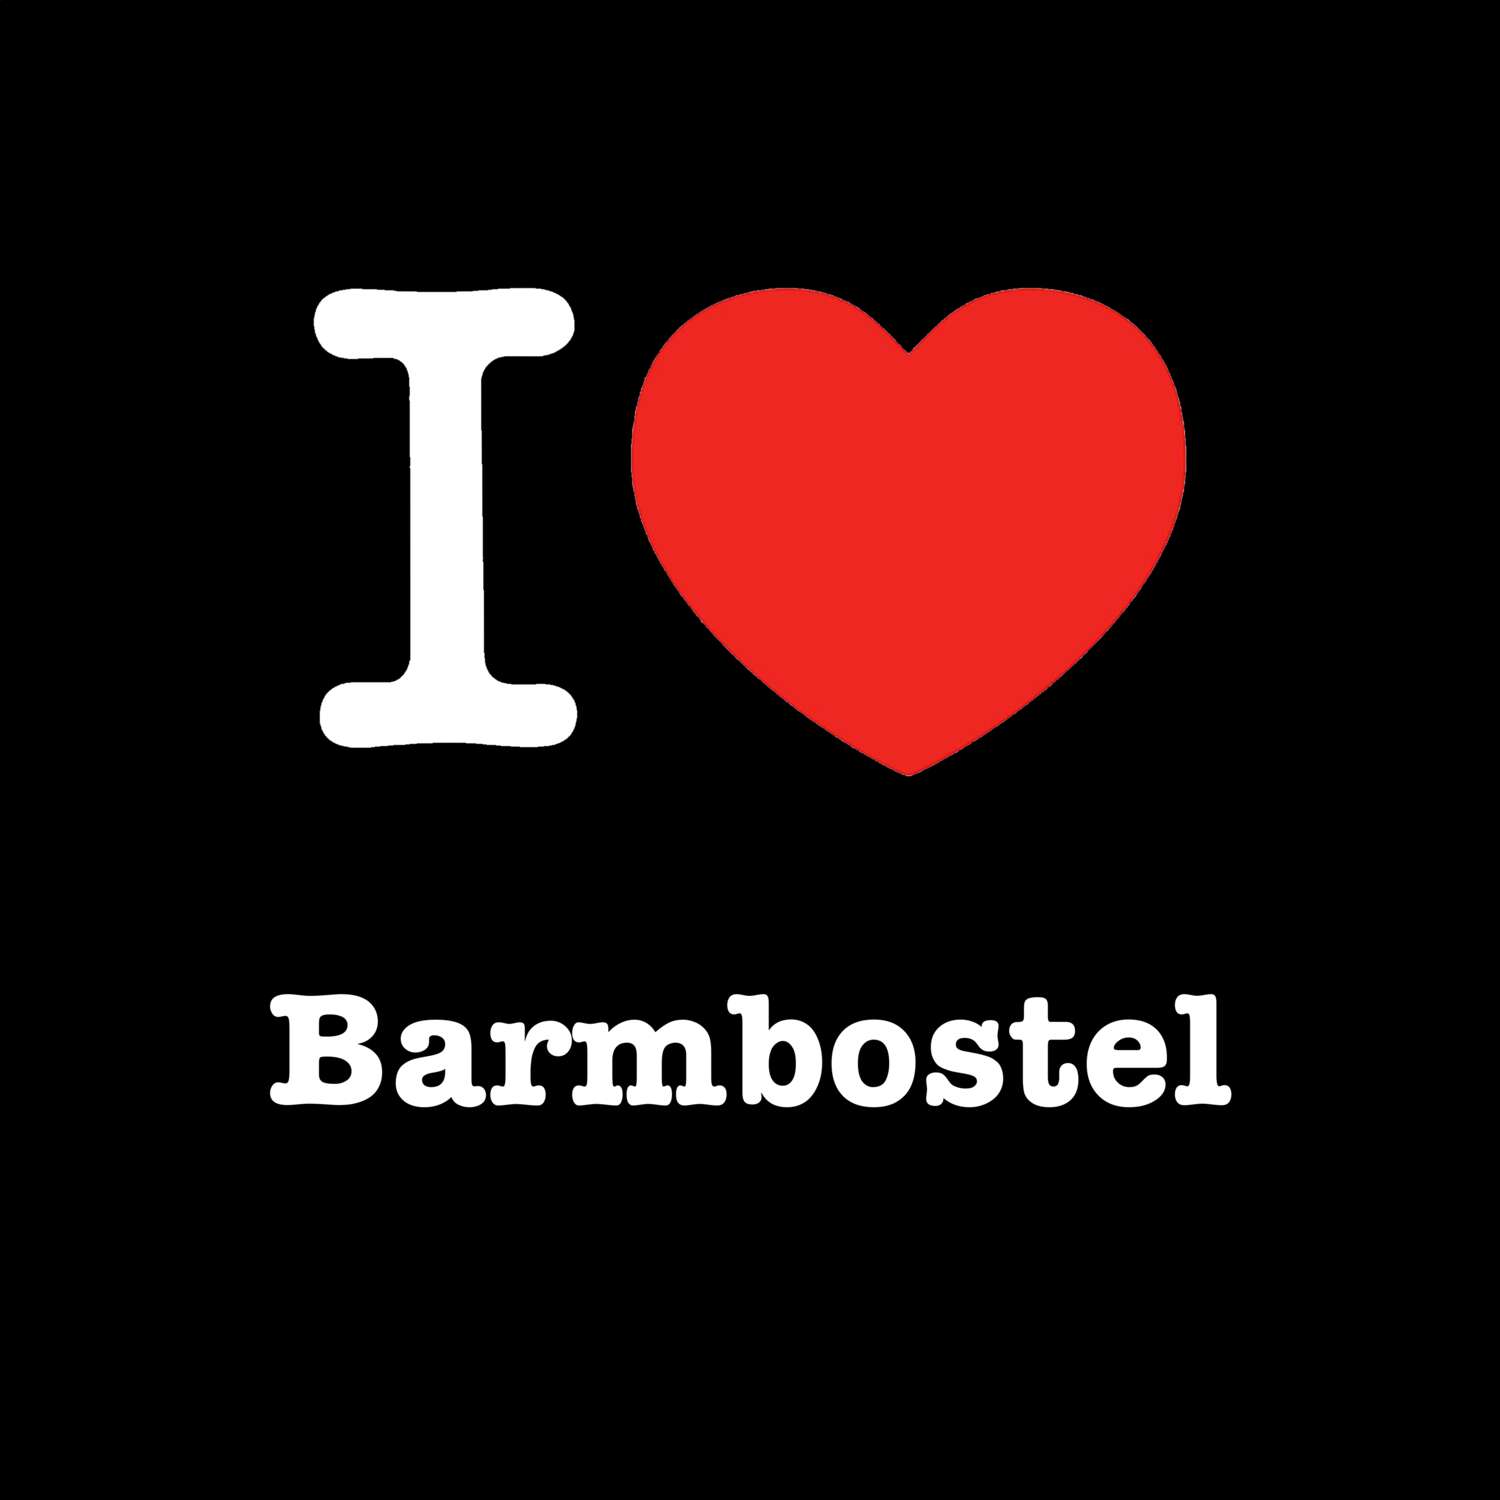 Barmbostel T-Shirt »I love«